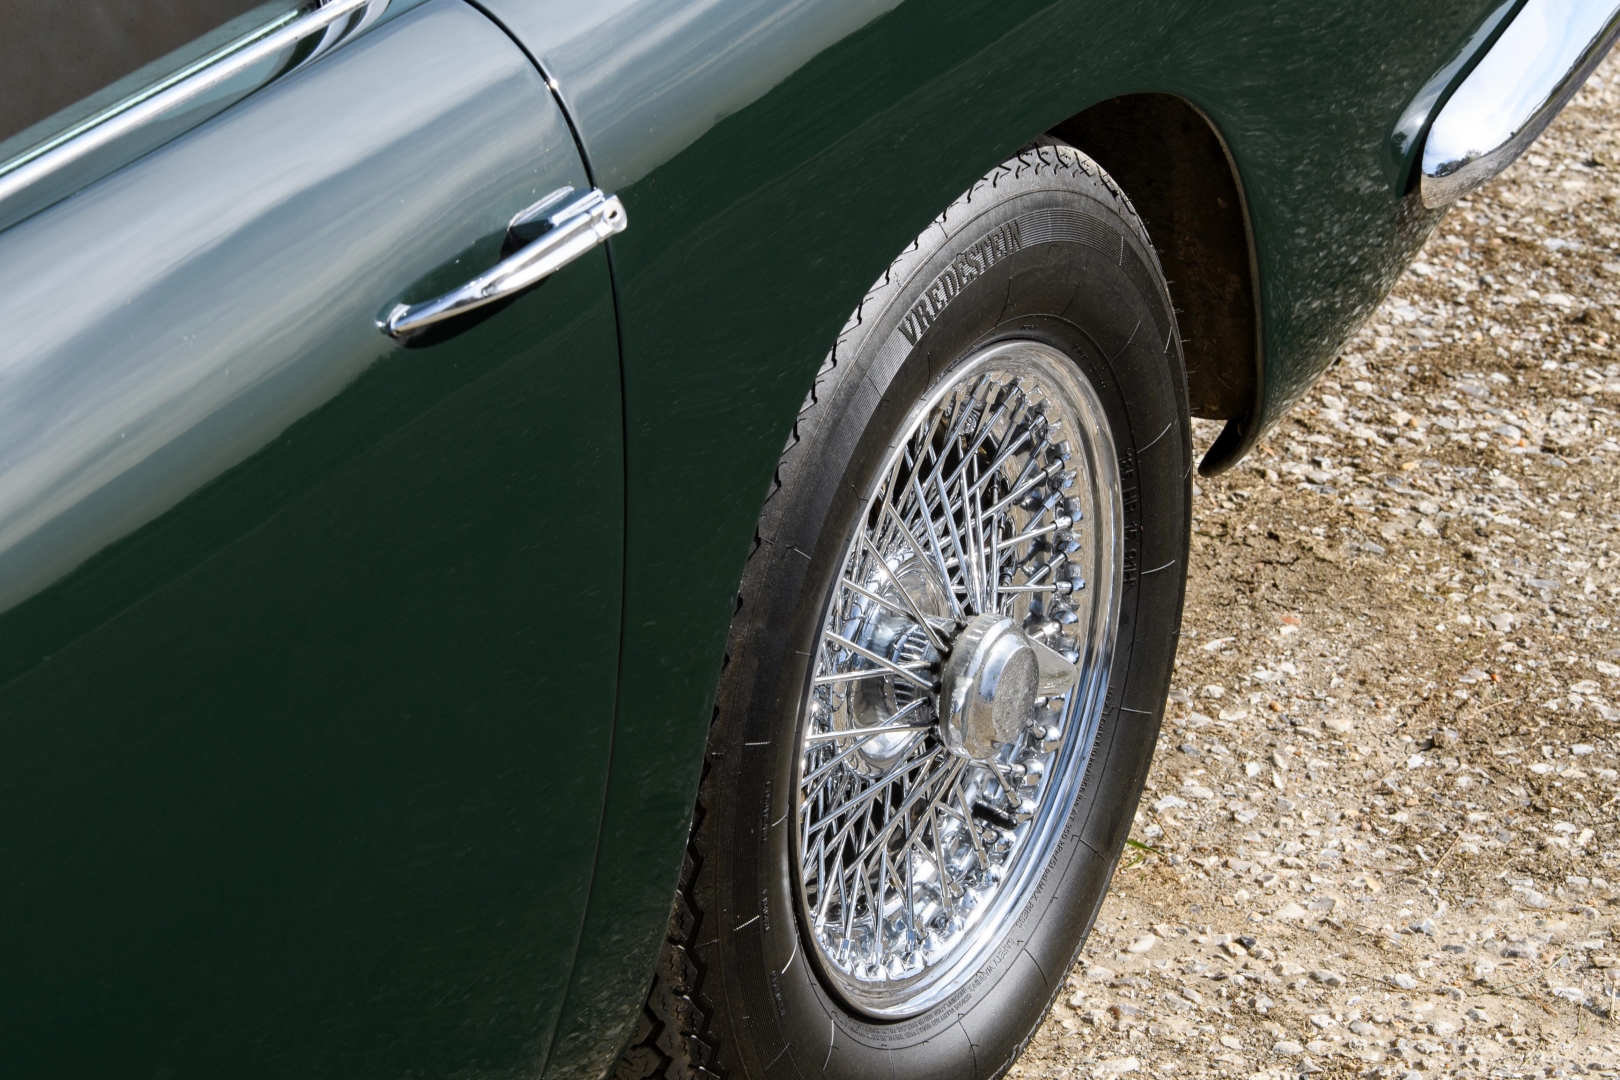 1964 Aston Martin DB5 » Dylan Miles